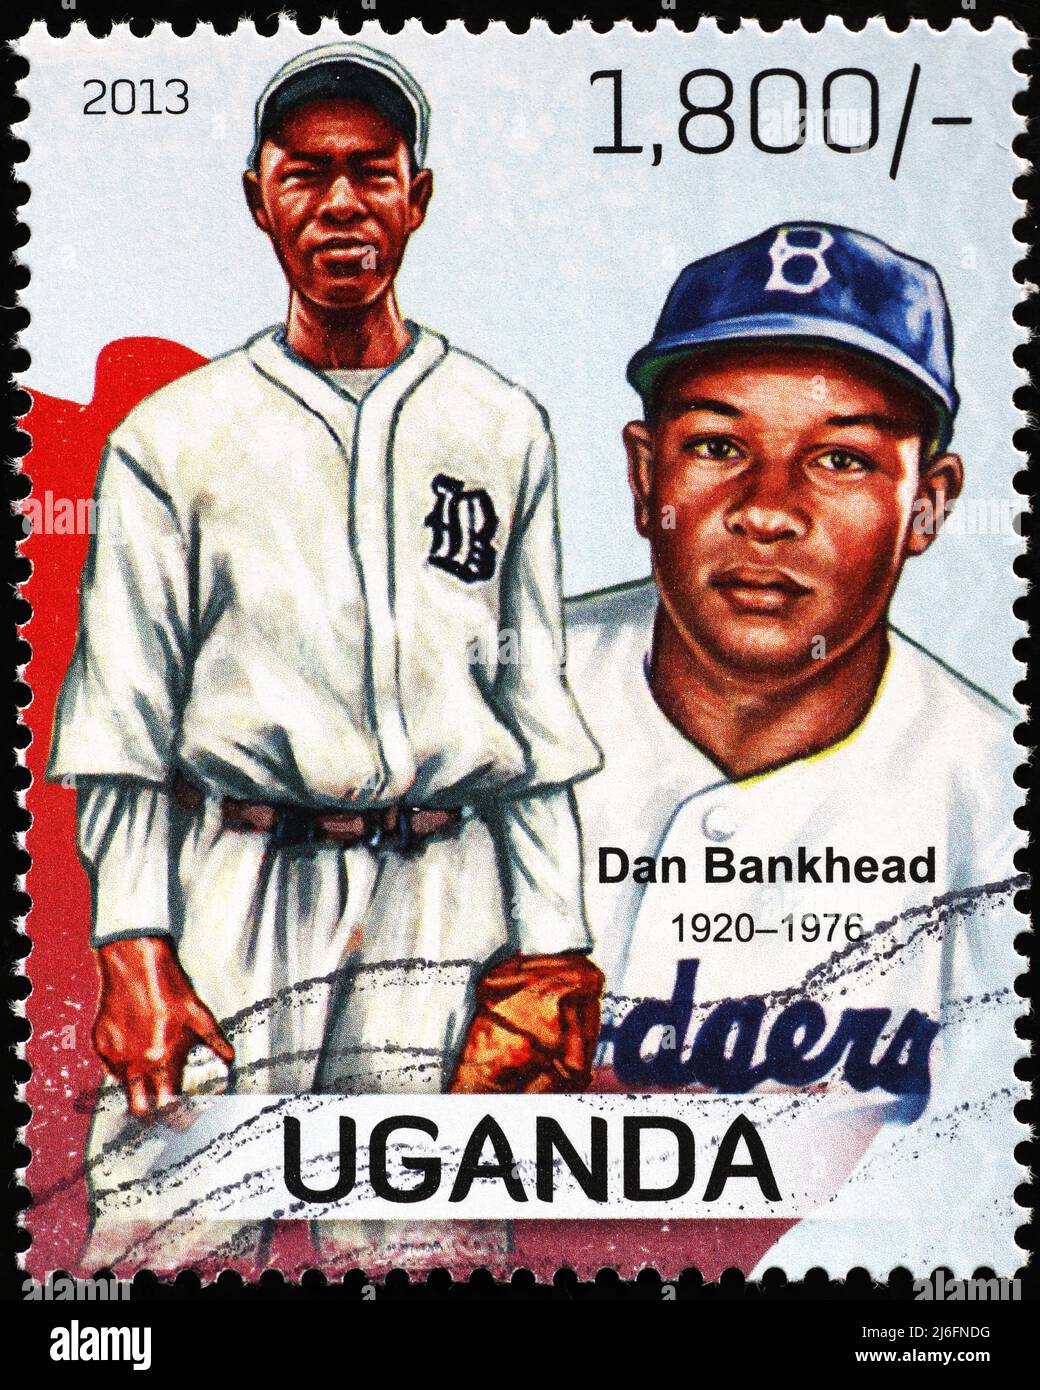 Baseballweltmeister Dan Bankhead auf Briefmarke Stockfoto